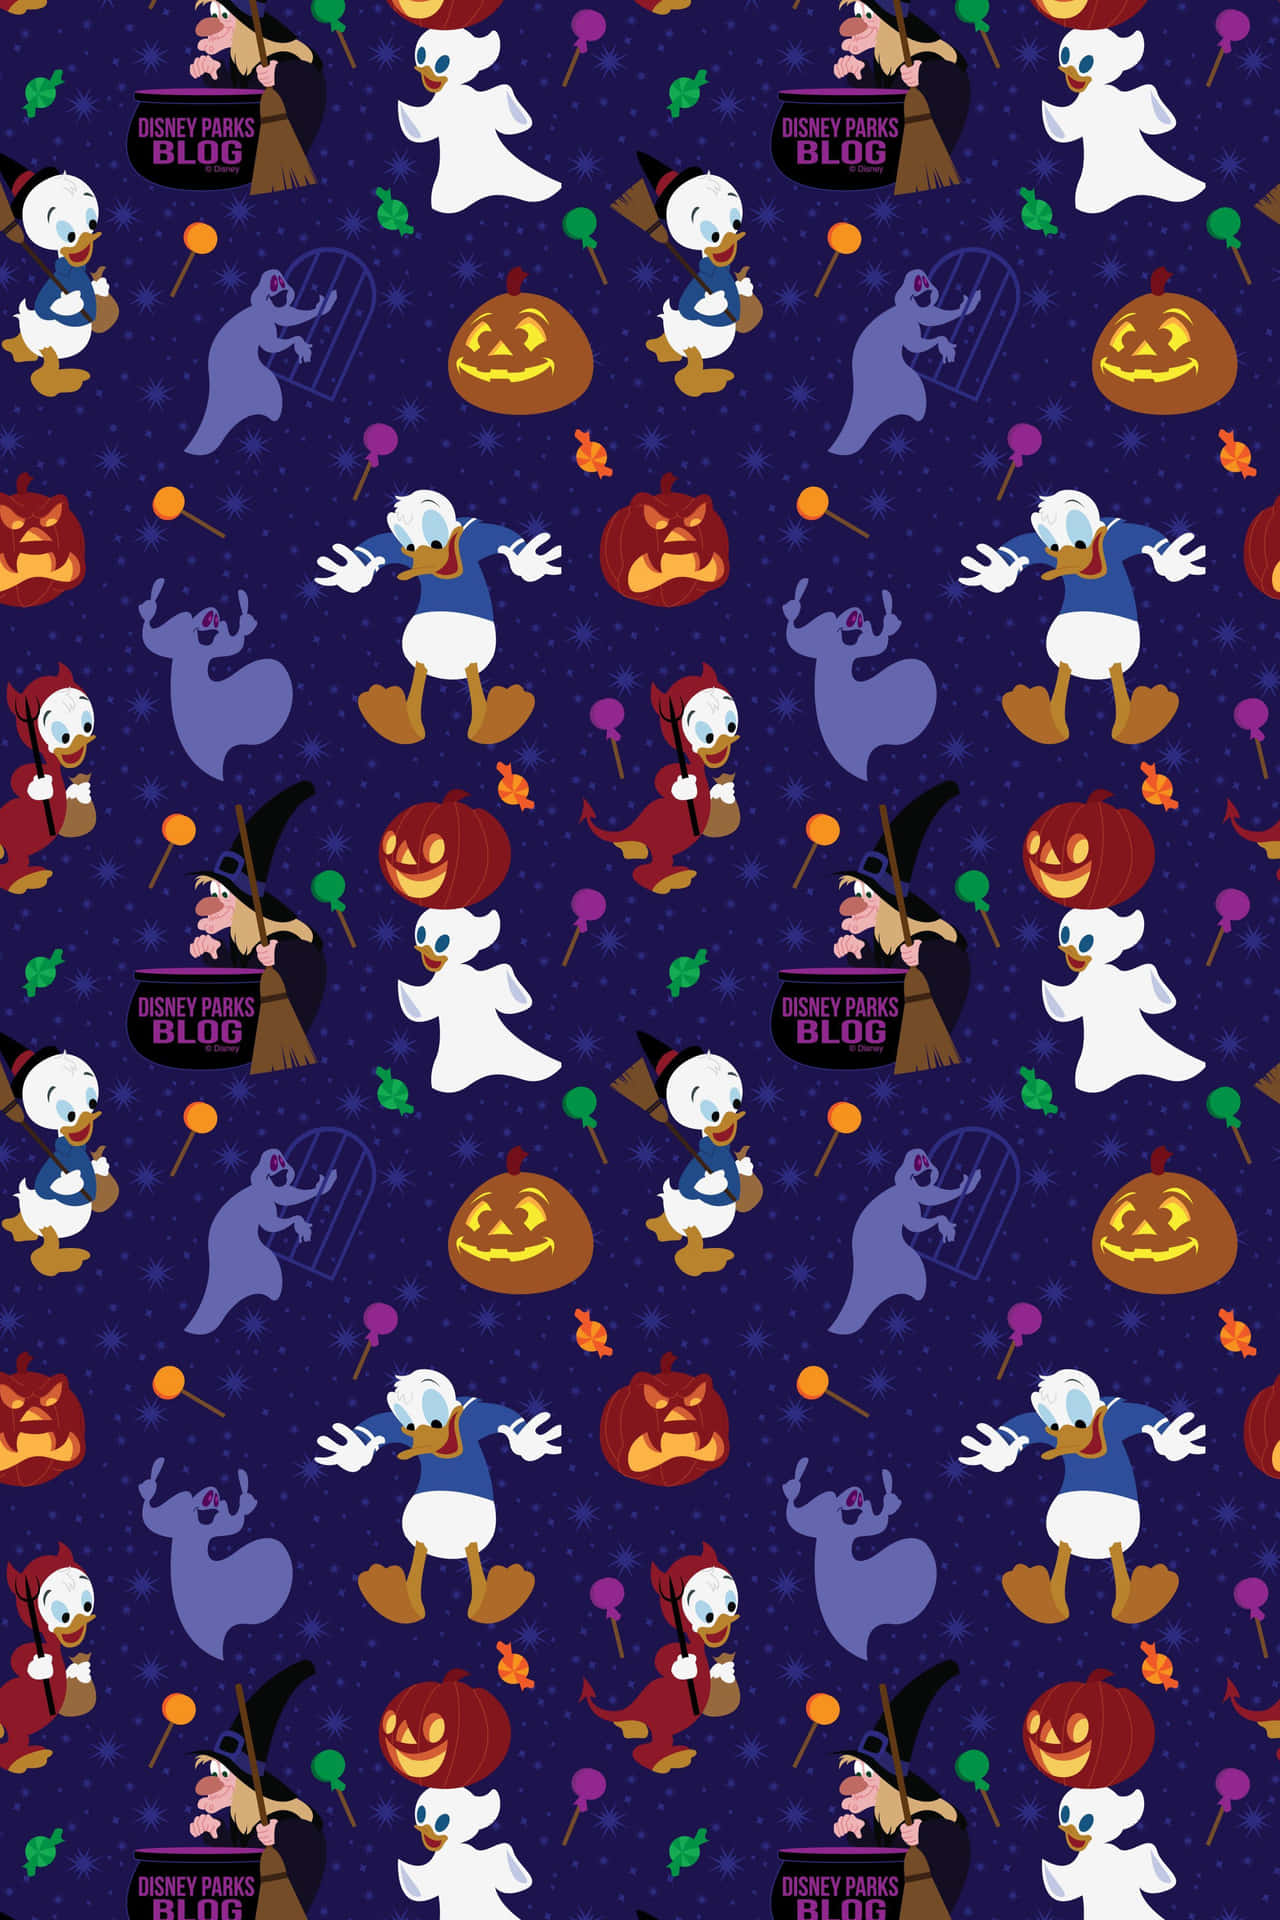 Trickor Treat Lila Halloween Wallpaper